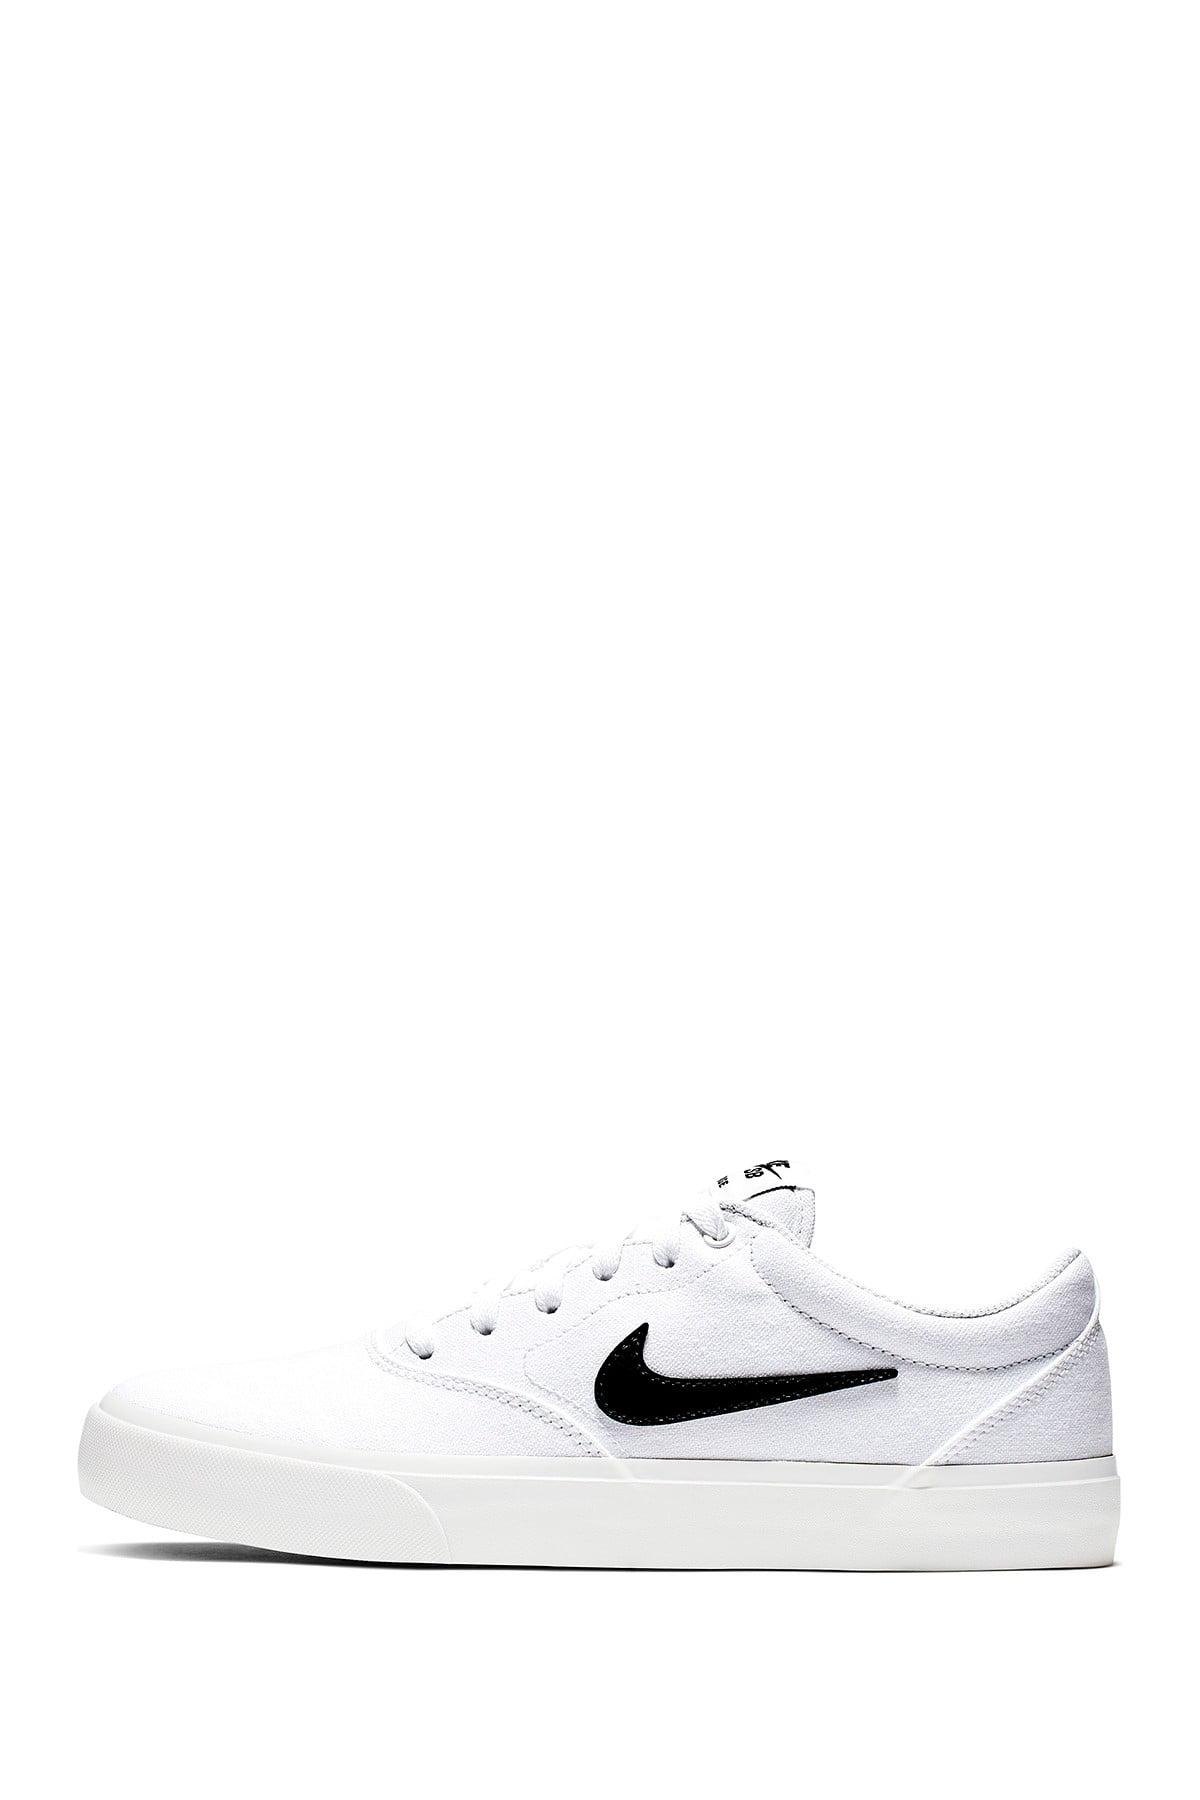 Nike Canvas Sb Charge Slr Sneaker in White for Men - Lyst